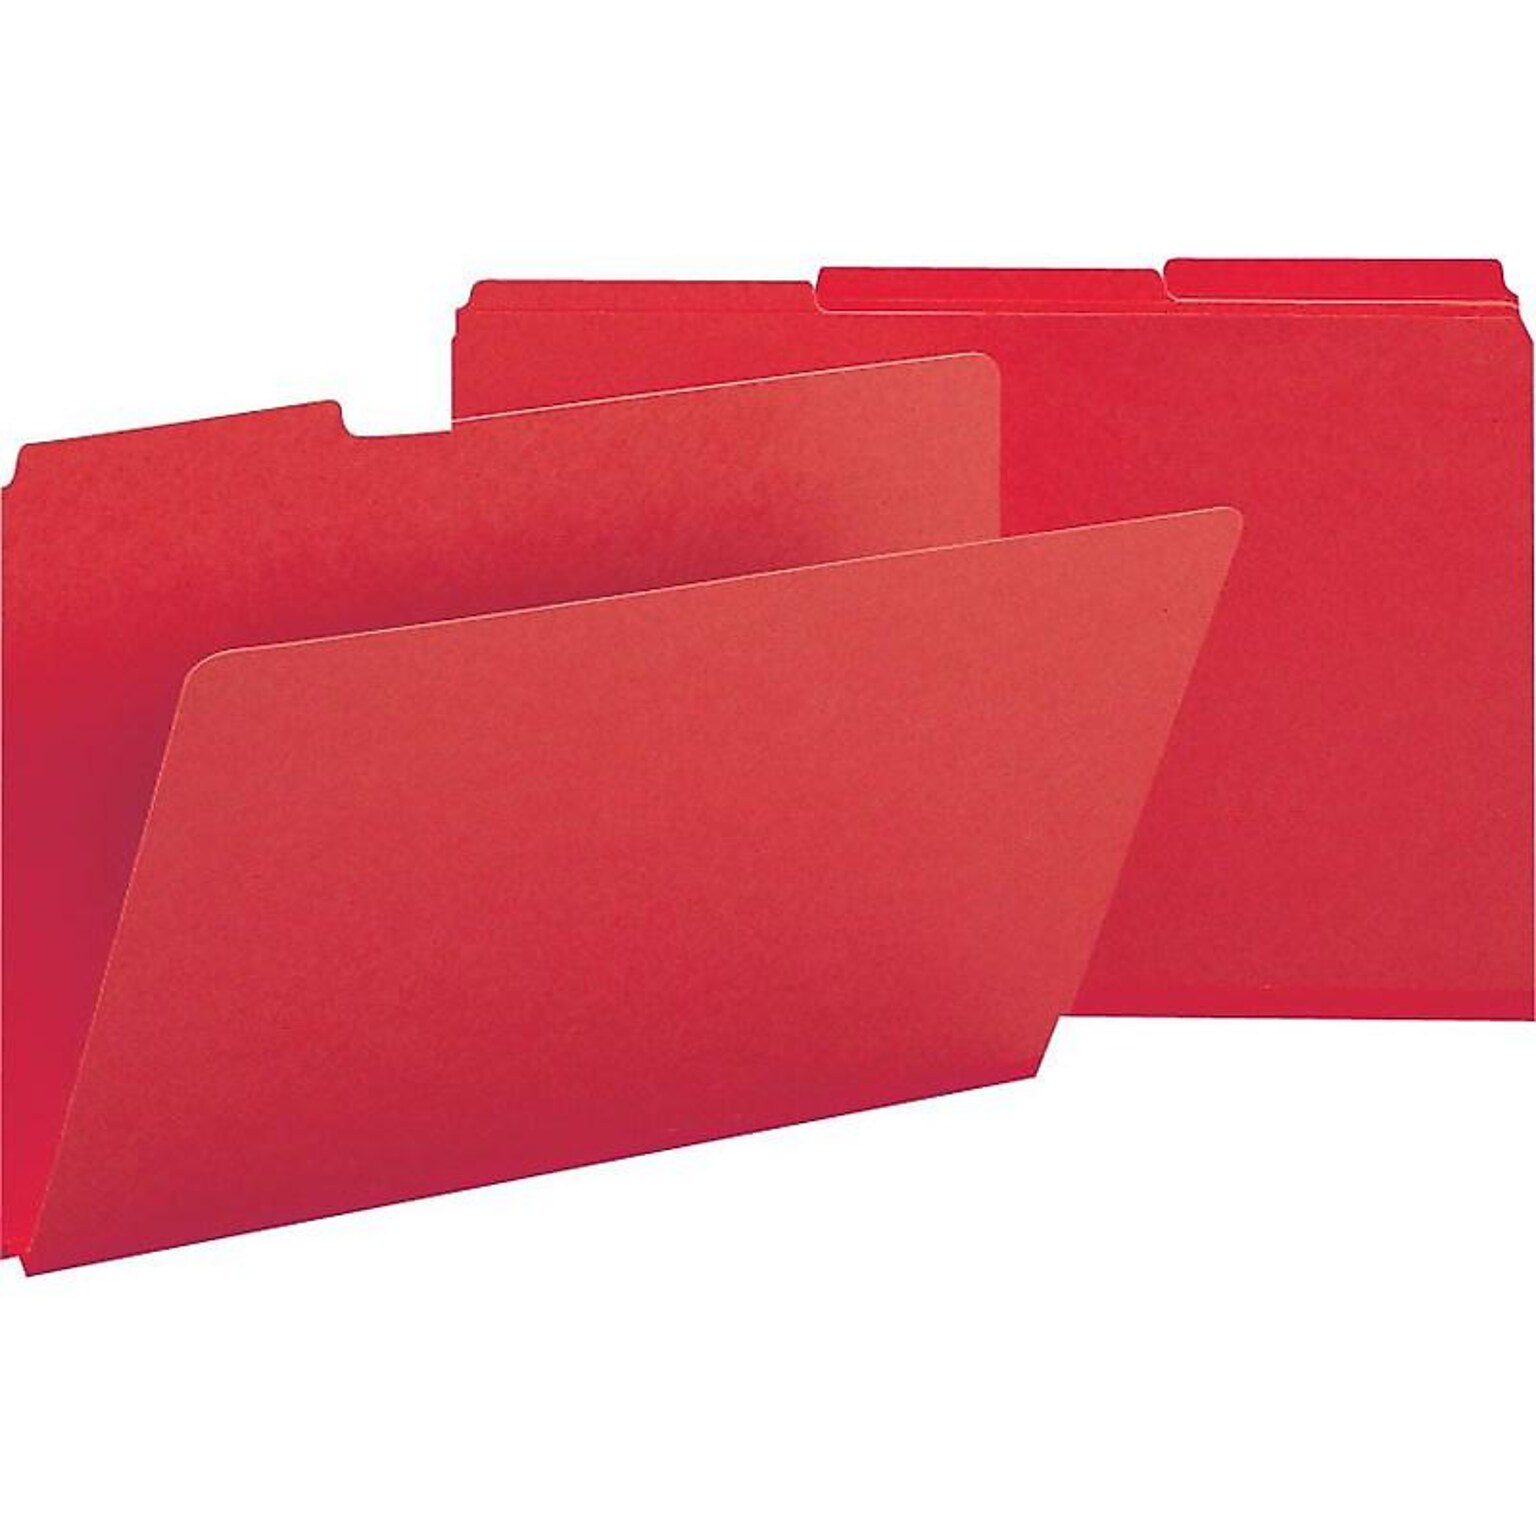 Smead Pressboard File Folder, 1/3-Cut Tab, 1 Expansion, Legal Size, Bright Red, 25 per Box (22538)